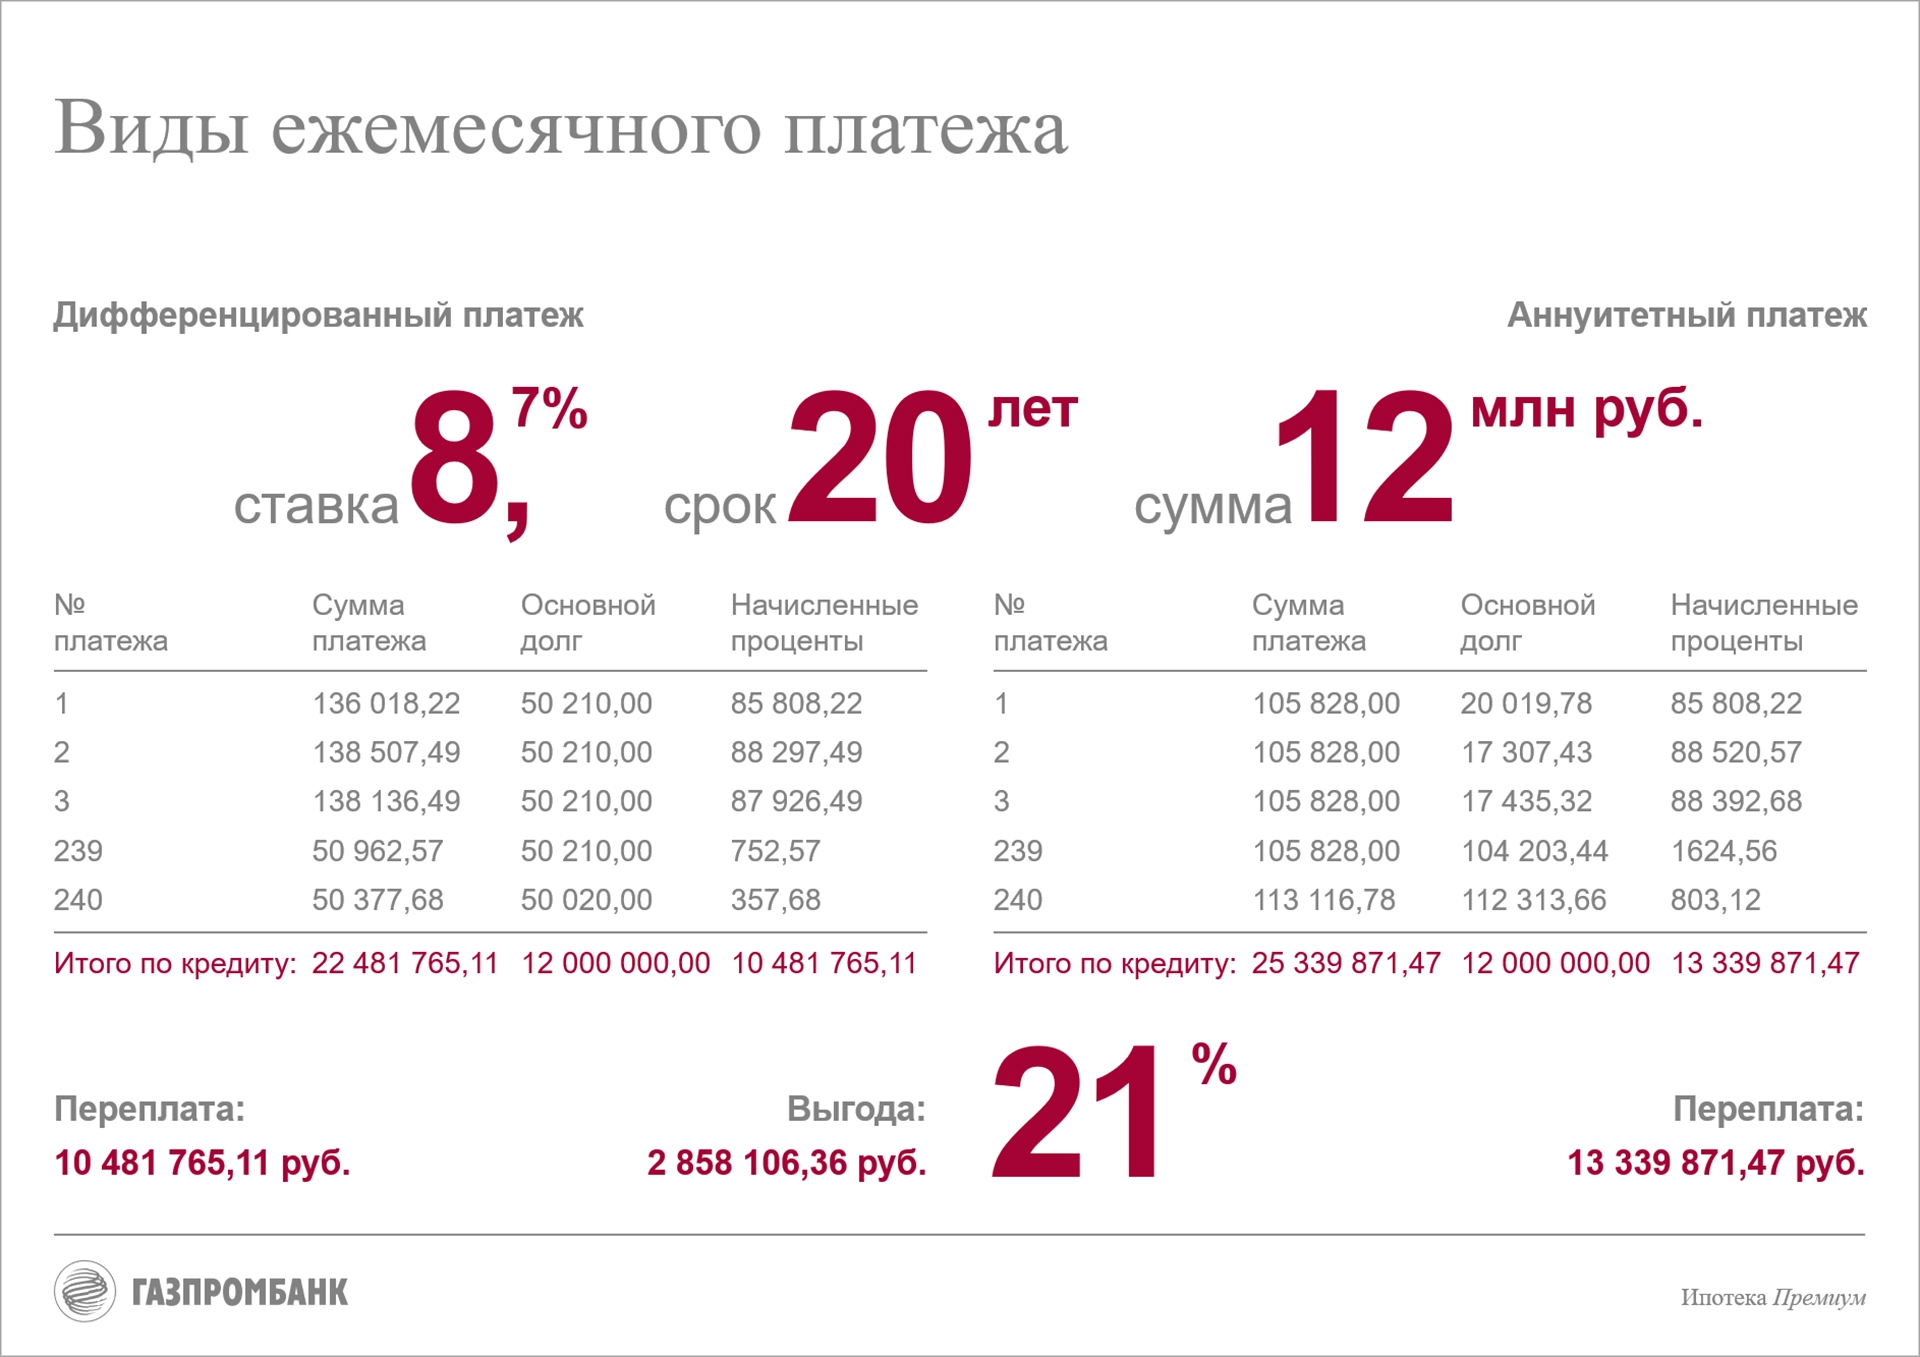 Газпромбанк - Презентации для менеджеров банка